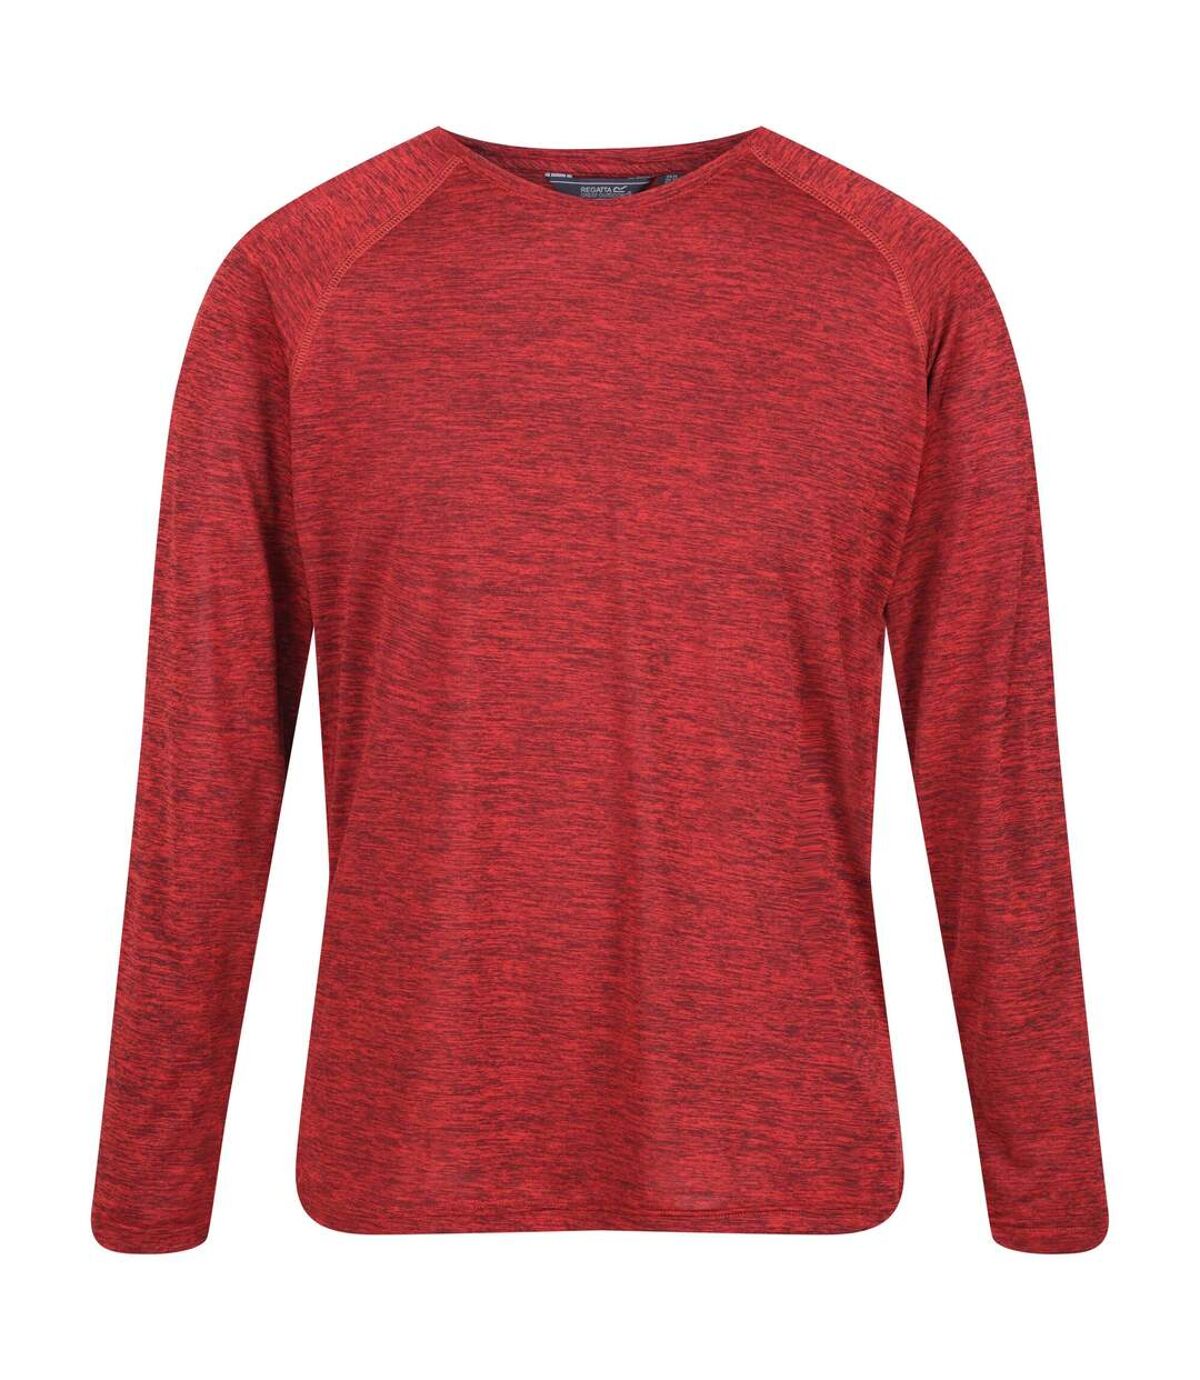 Regatta - T-shirt BURLOW - Homme (Rouge vif) - UTRG5796